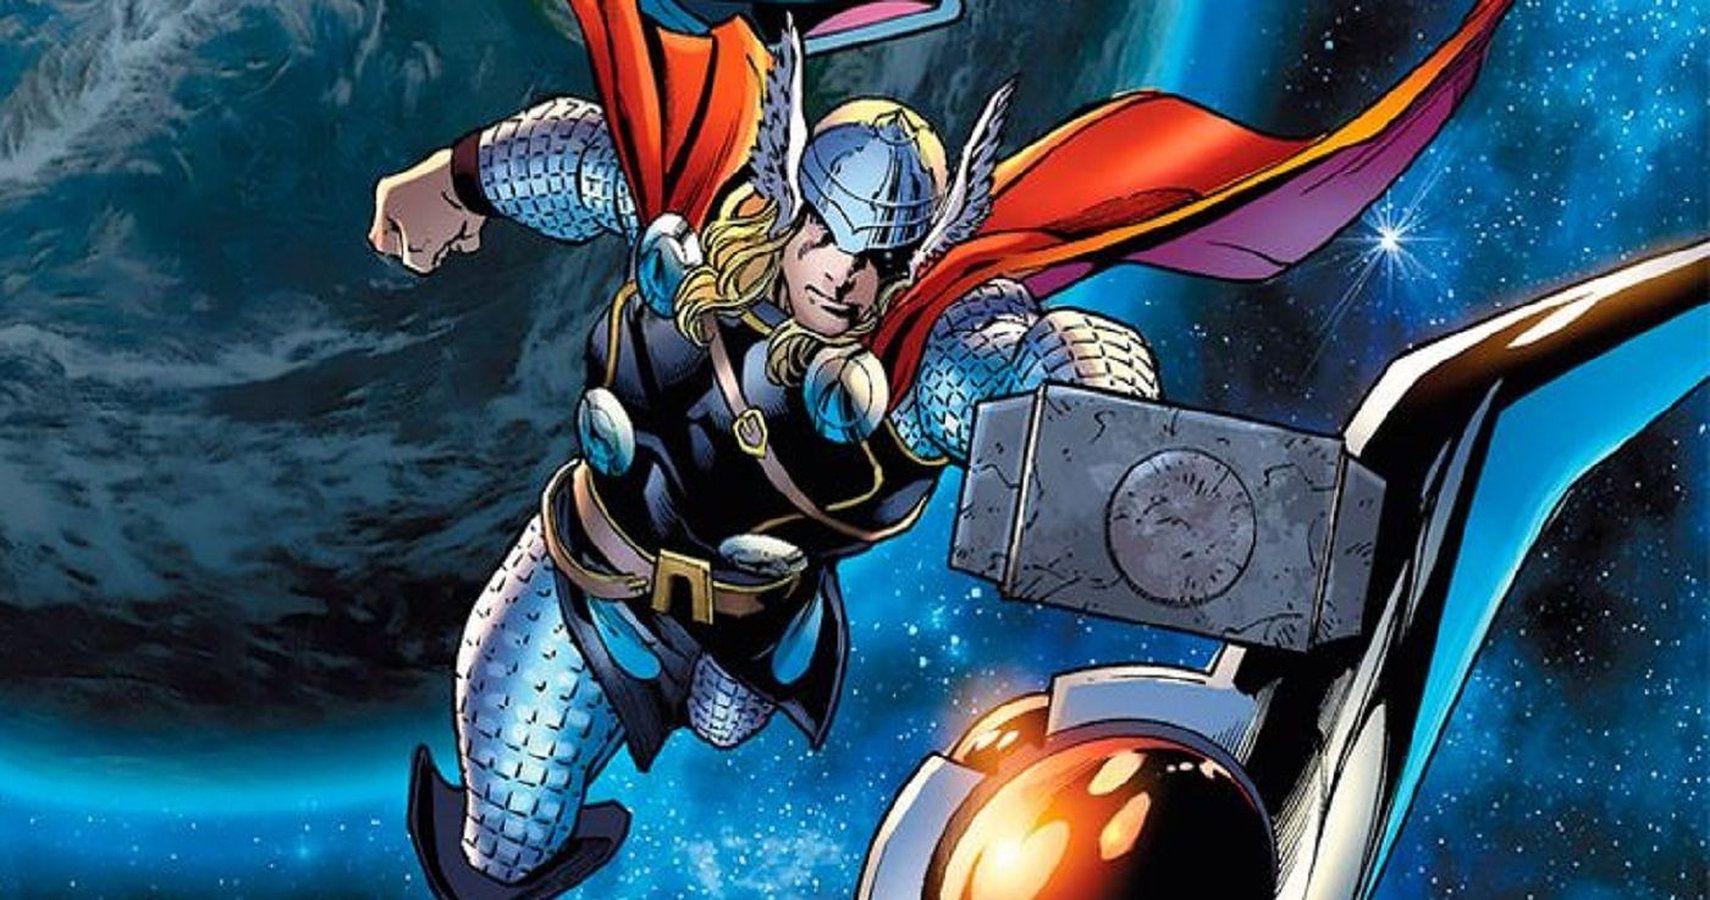 Thor flying